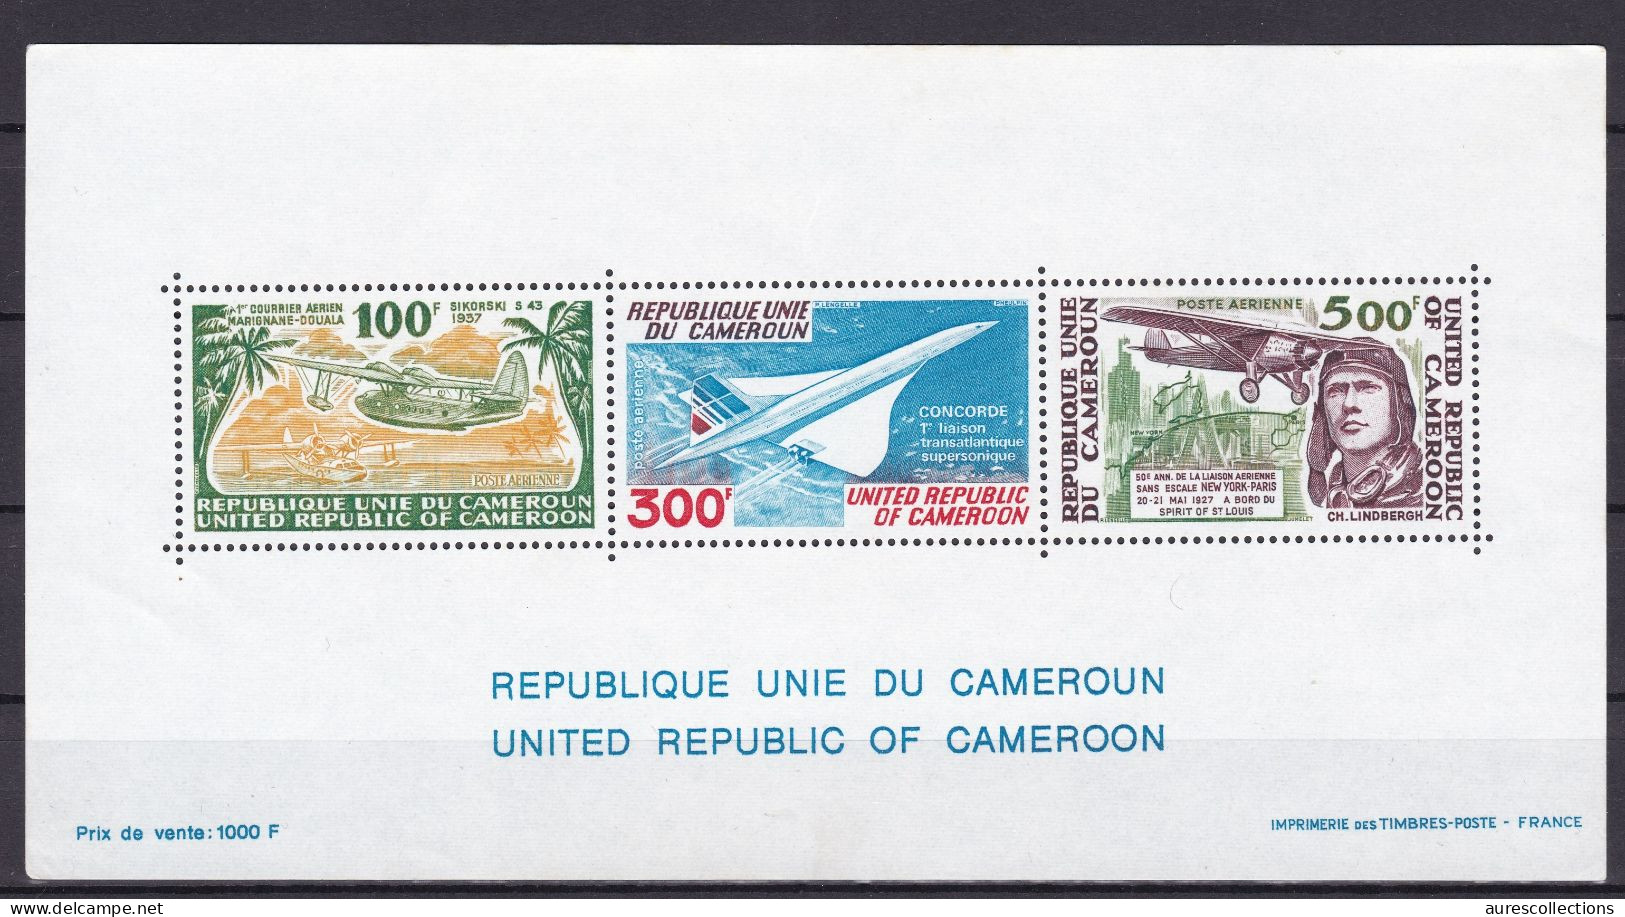 CAMEROON CAMEROUN 1977 BLOC SHEET PA - AVIATION CONCORDE LINDBERGH - MNH - Cameroun (1960-...)